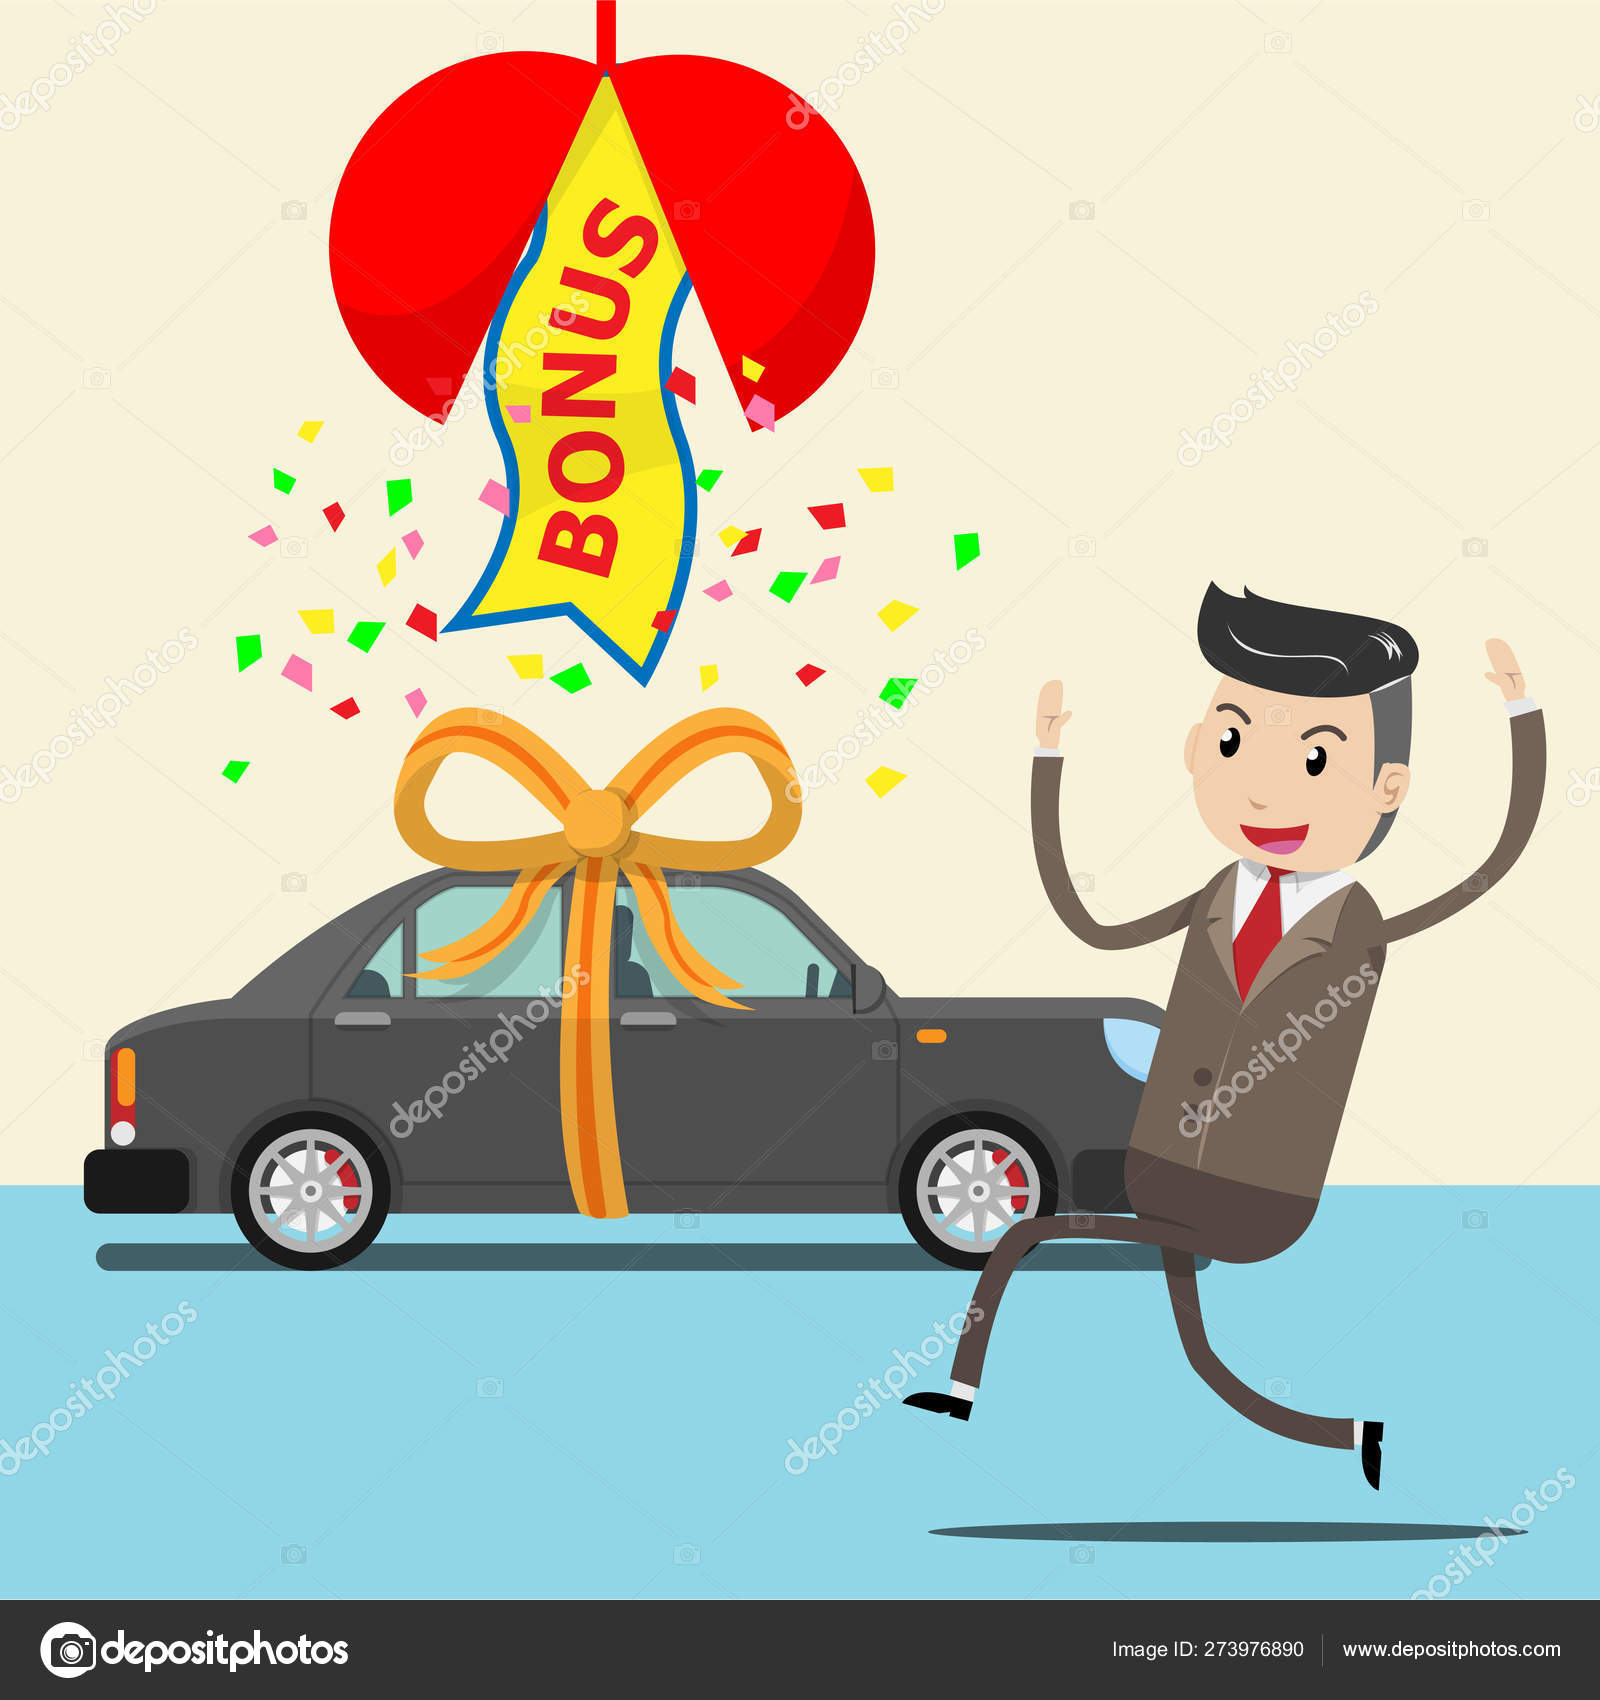 https://st4.depositphotos.com/23495938/27397/v/1600/depositphotos_273976890-stock-illustration-happy-employee-receive-new-car.jpg